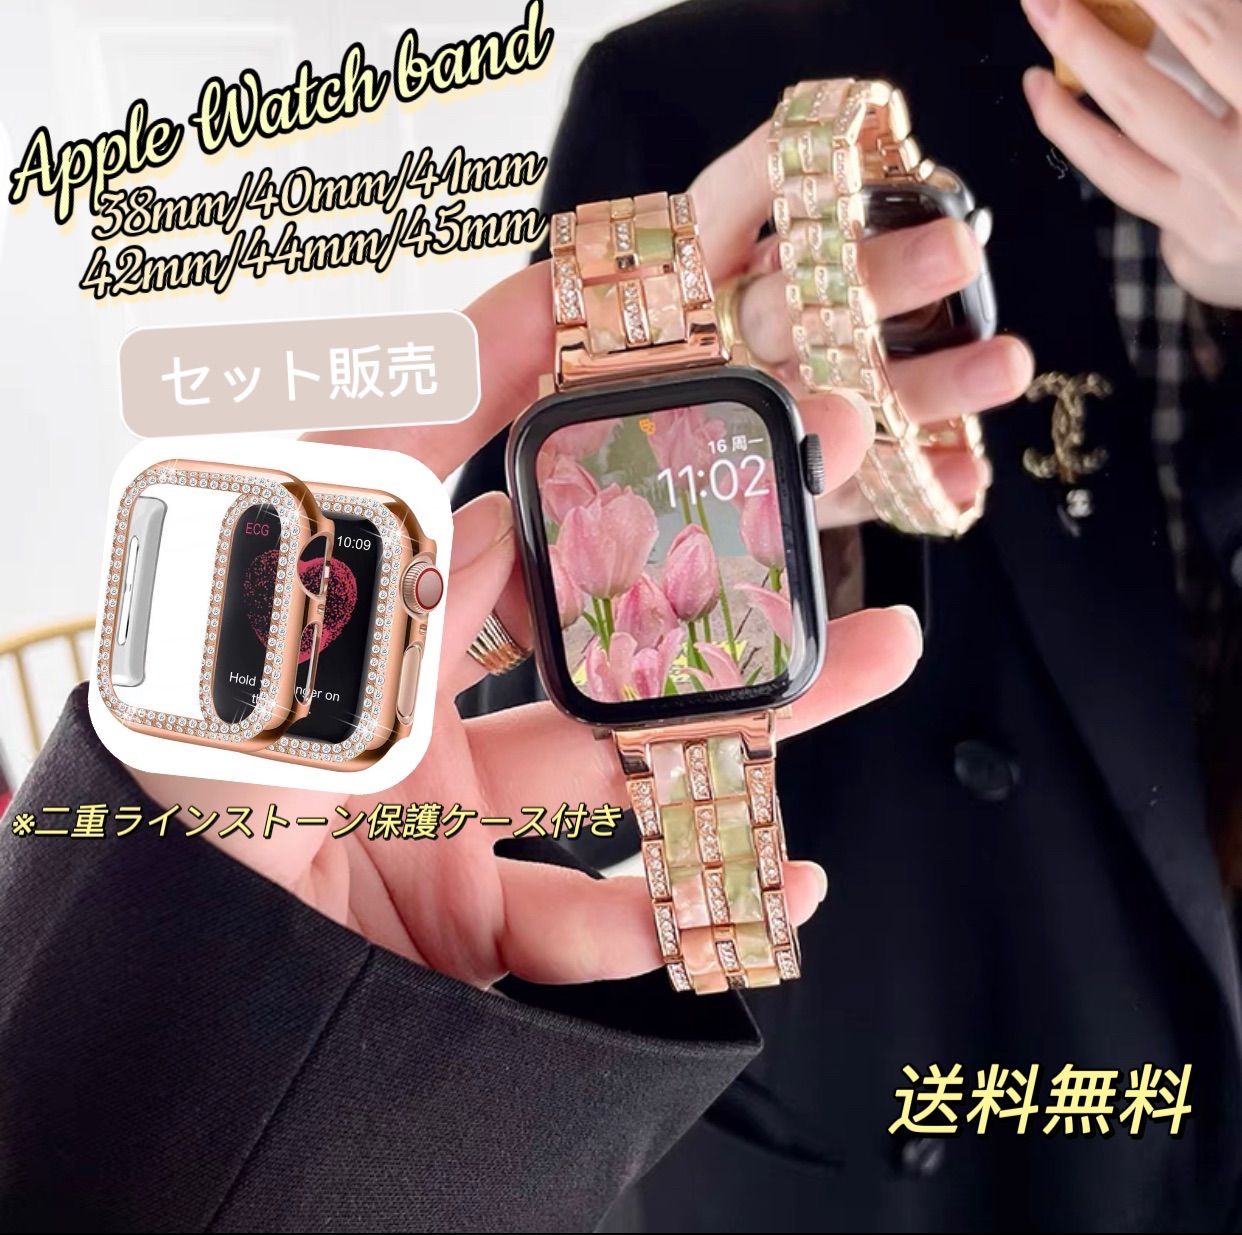 Apple Watch キラキラカバー u0026大理石柄 ベルト バンド セット 全サイズあり